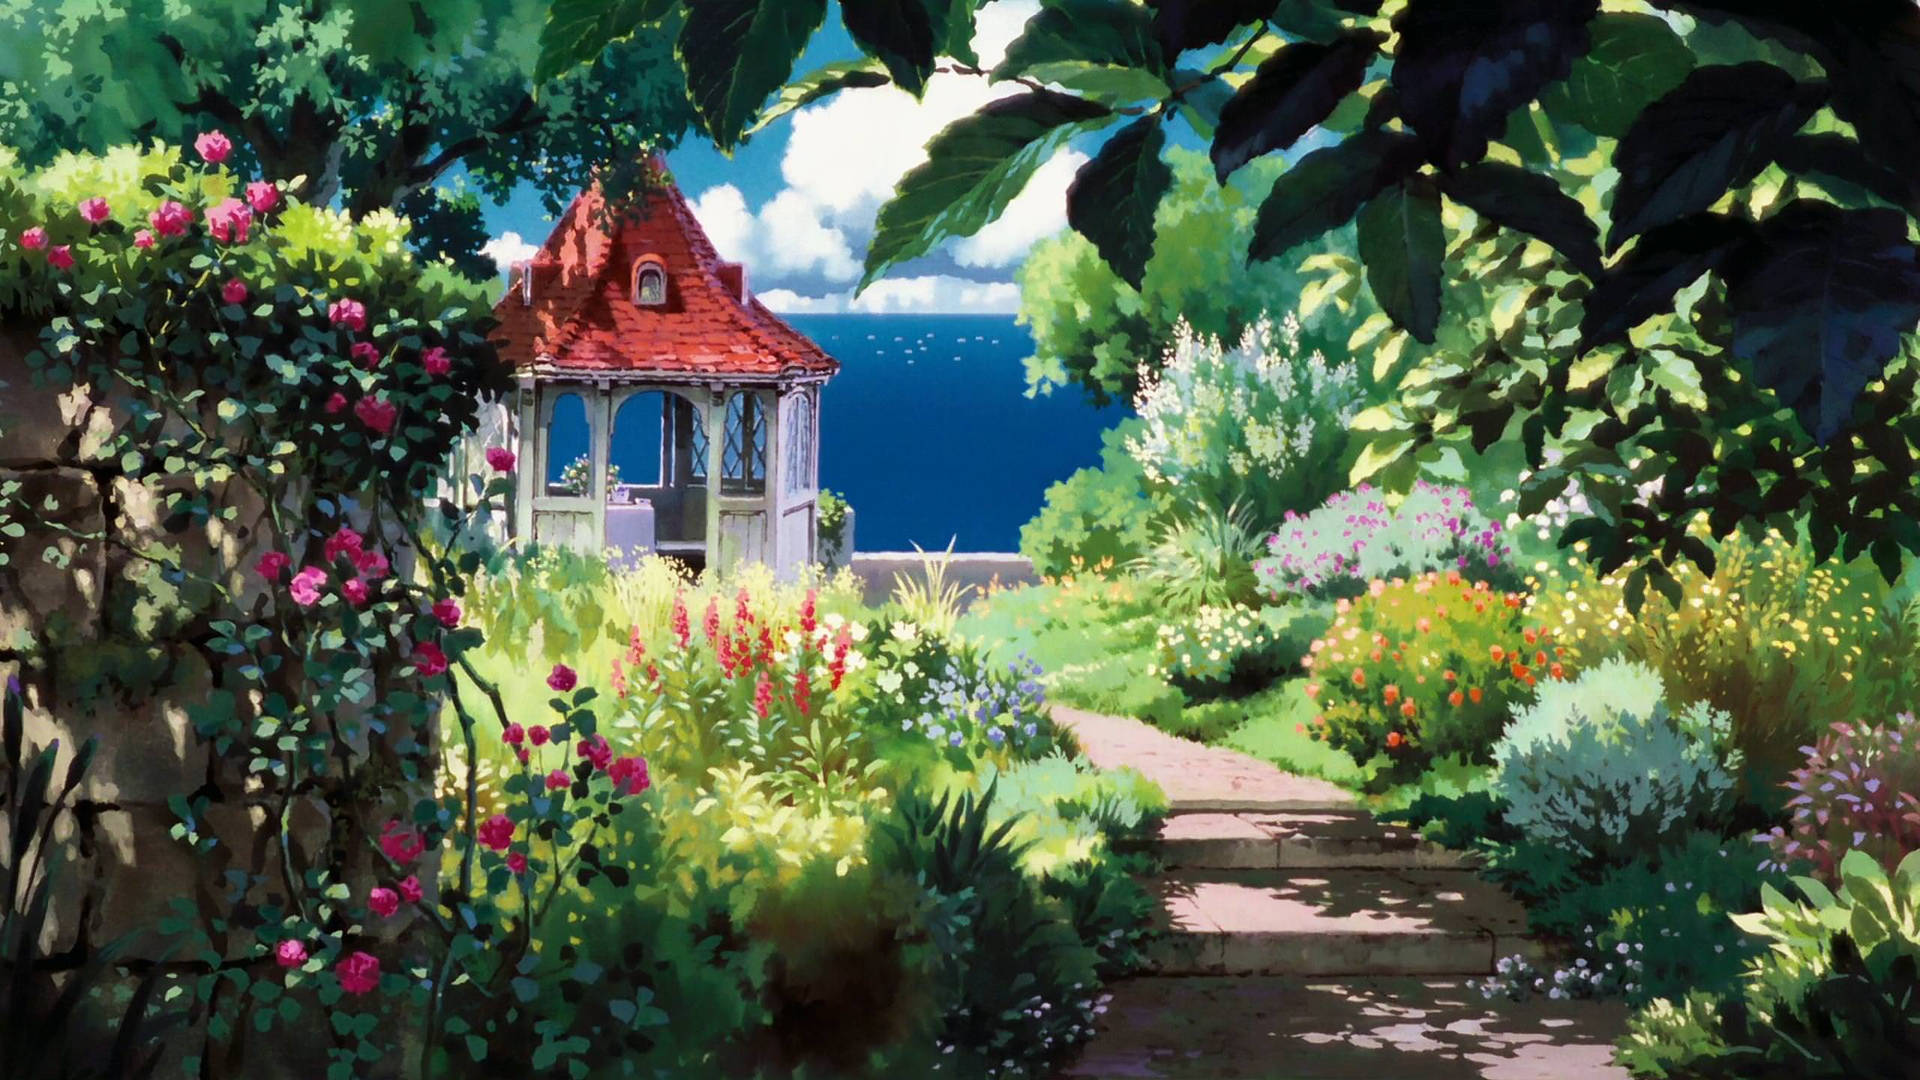 Download Studio Ghibli Scenery Gazebo In Garden Wallpaper